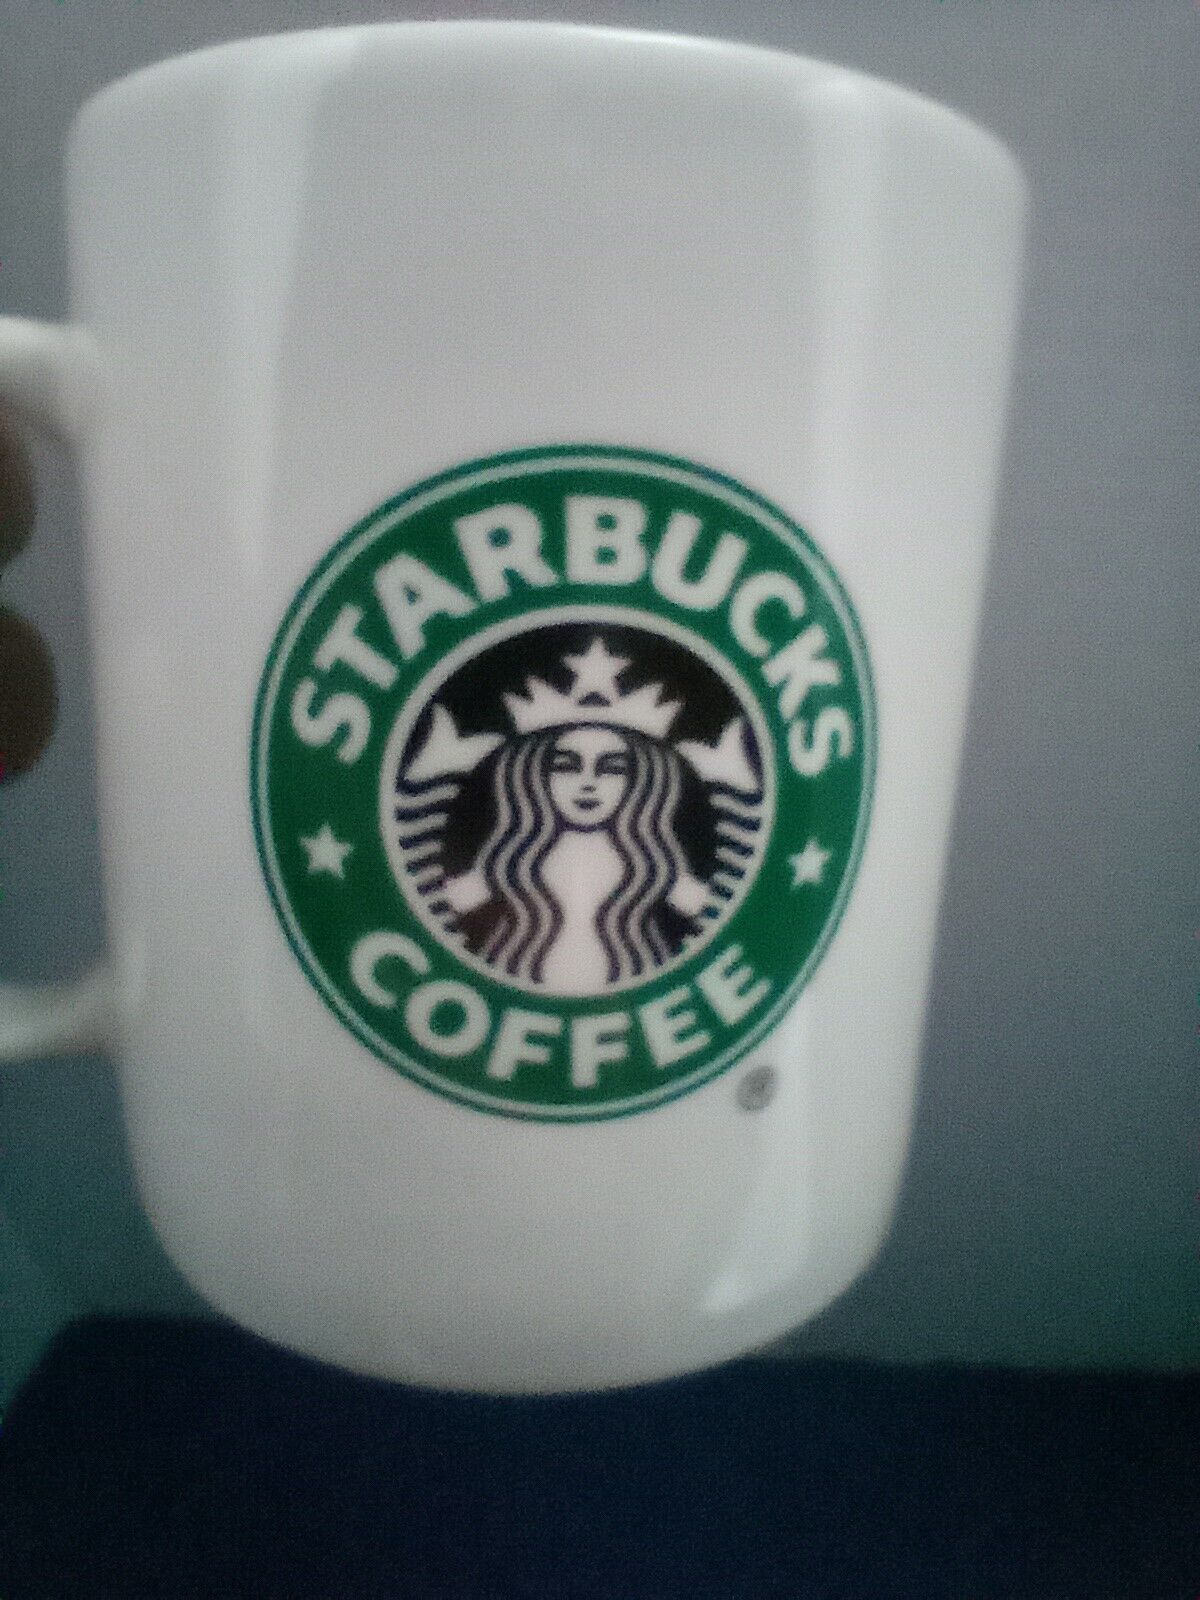 Starbucks Coffee Mug Cup 2004  White Original 2 sided Starbucks Logo. 12 ounce